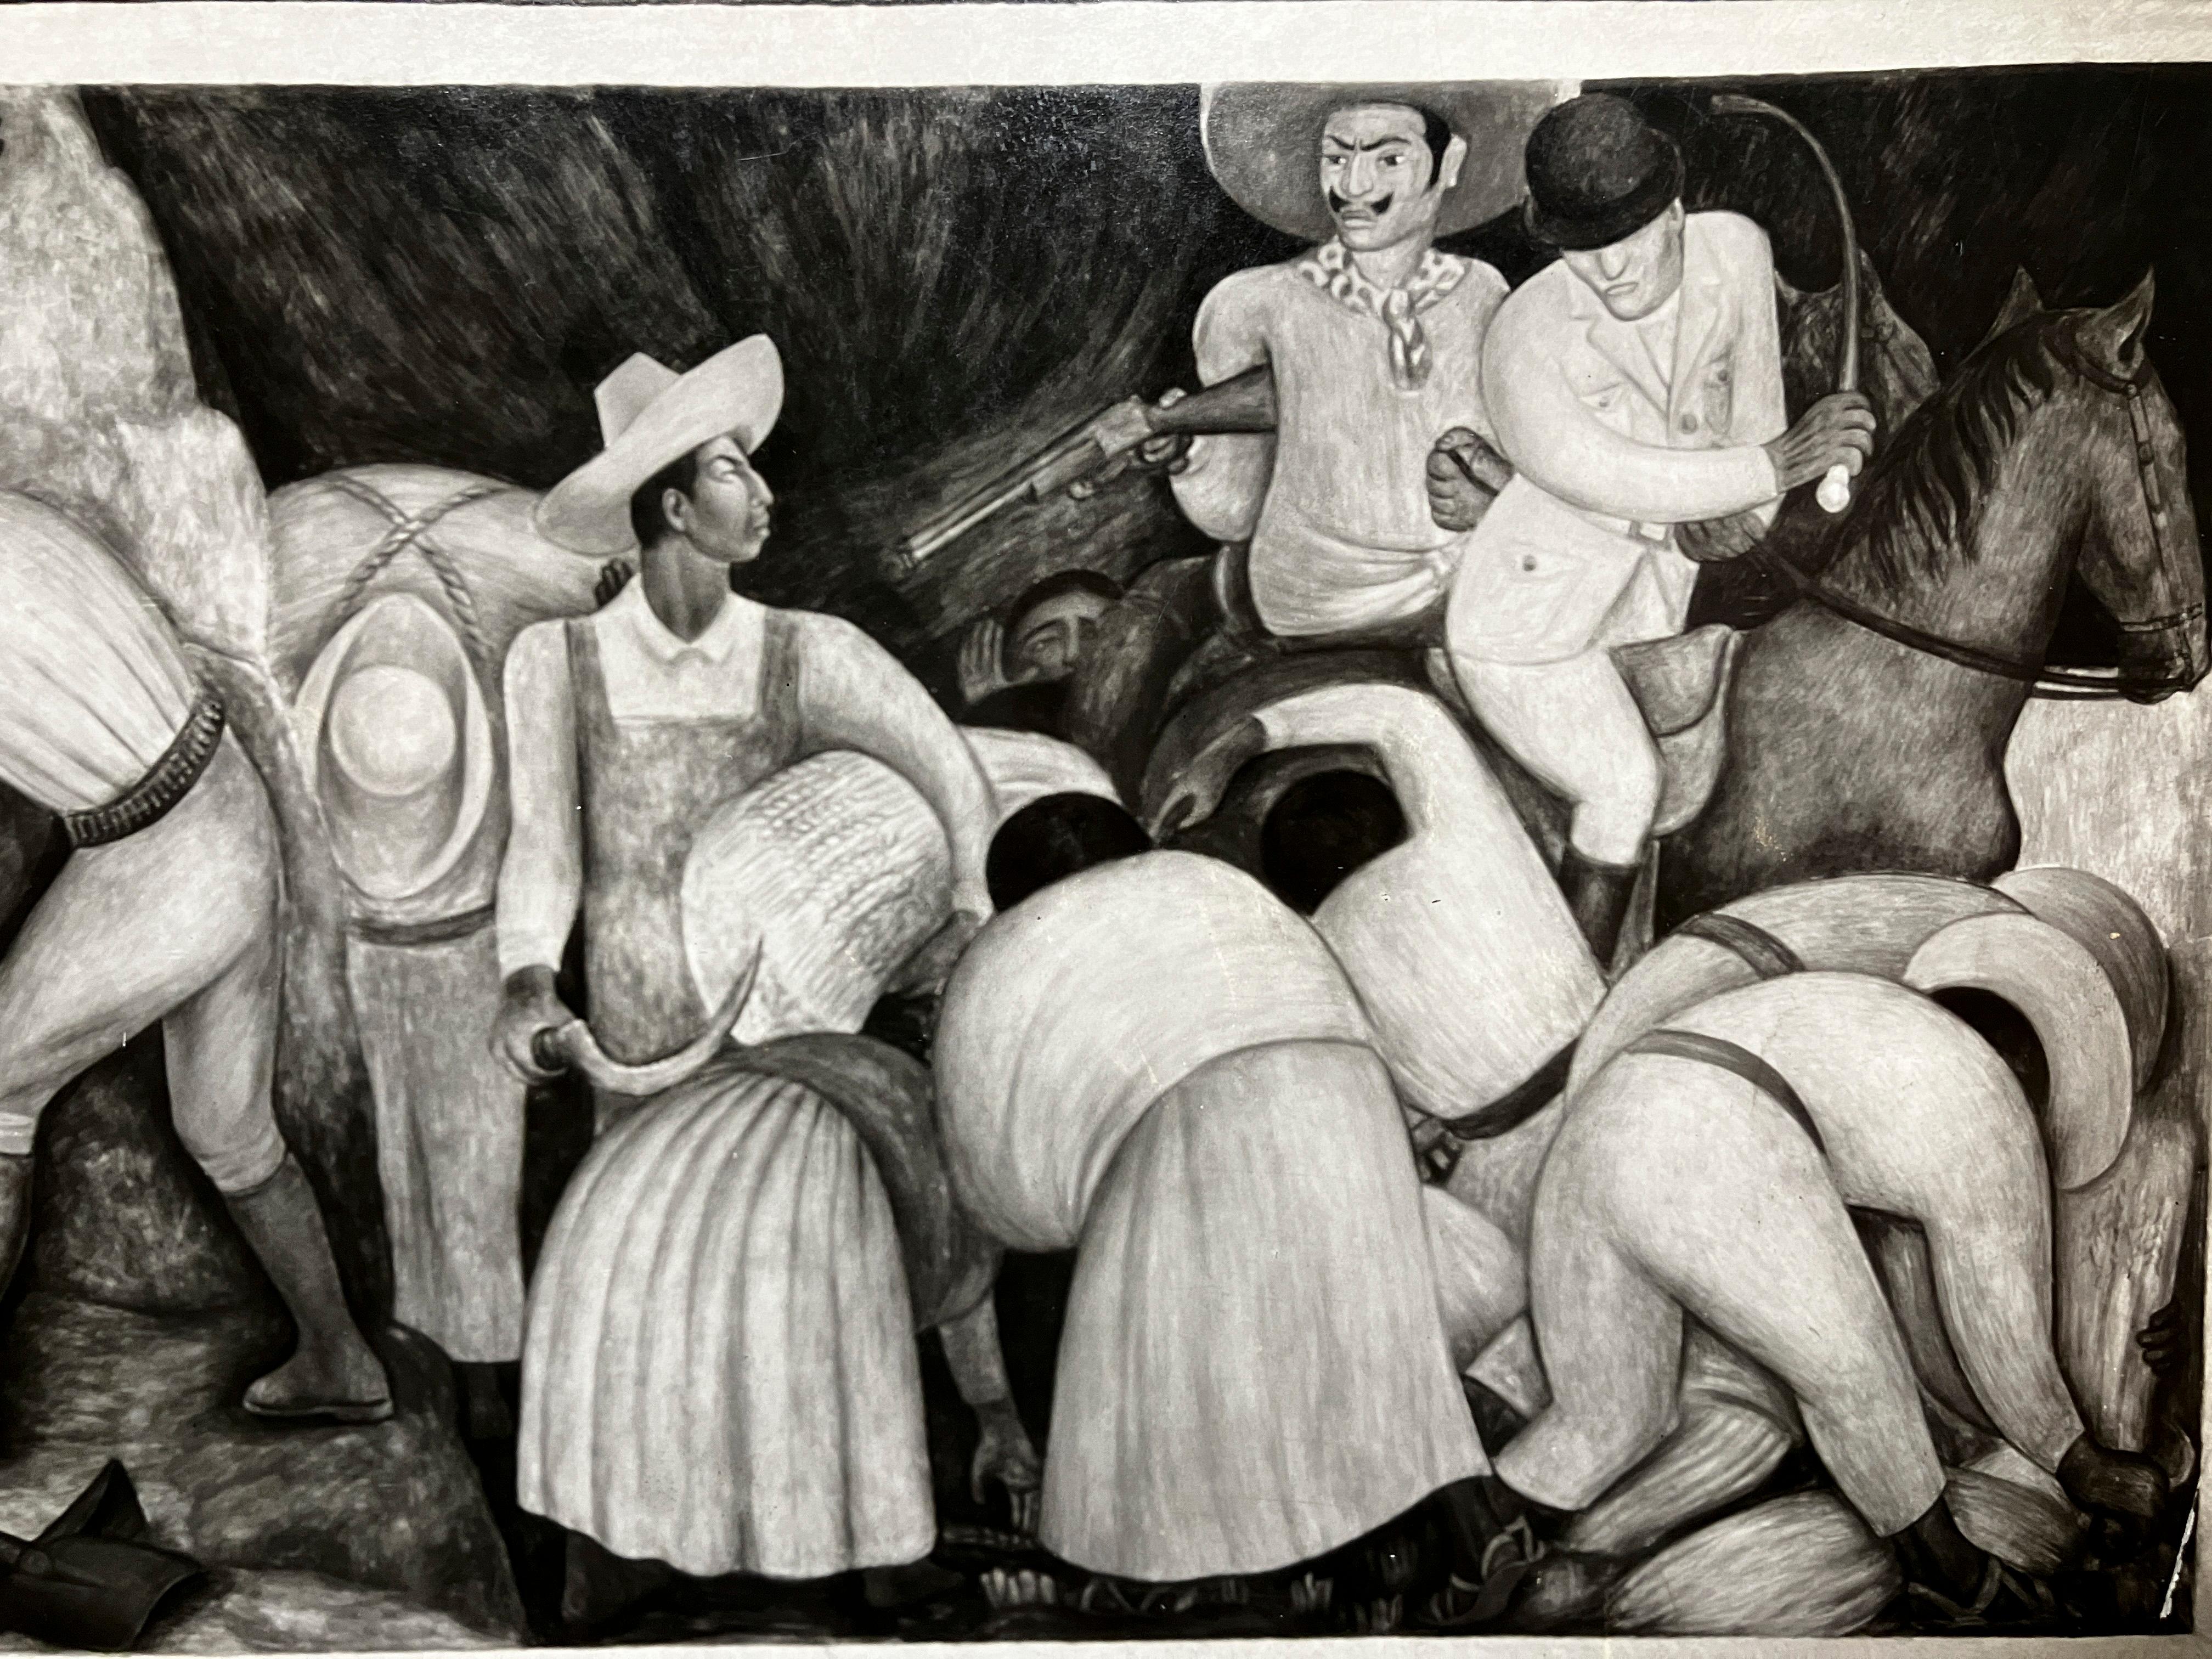 1920s Silver Gelatin Print by Tina Modotti of Diego Rivera Mural